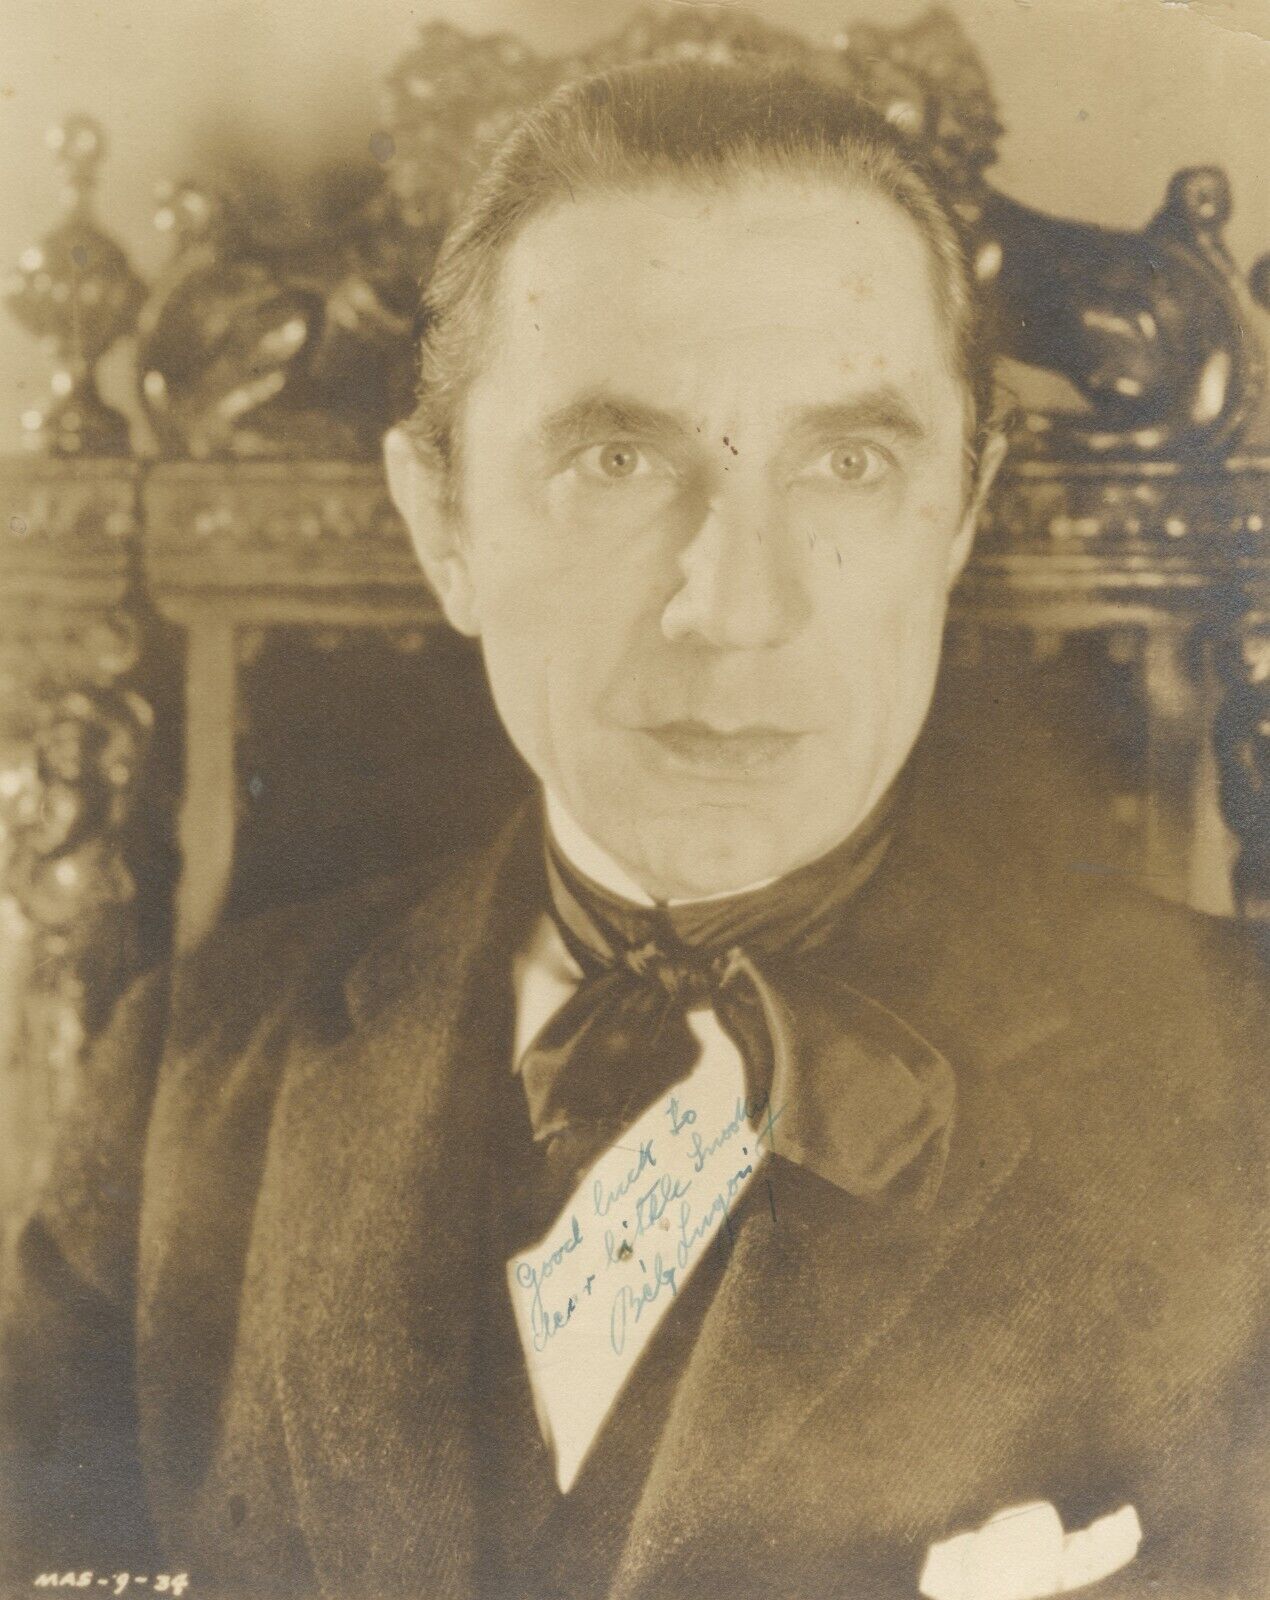 Bela Lugosi ~ Signed Autographed Vintage 1933 Photograph ~ PSA DNA